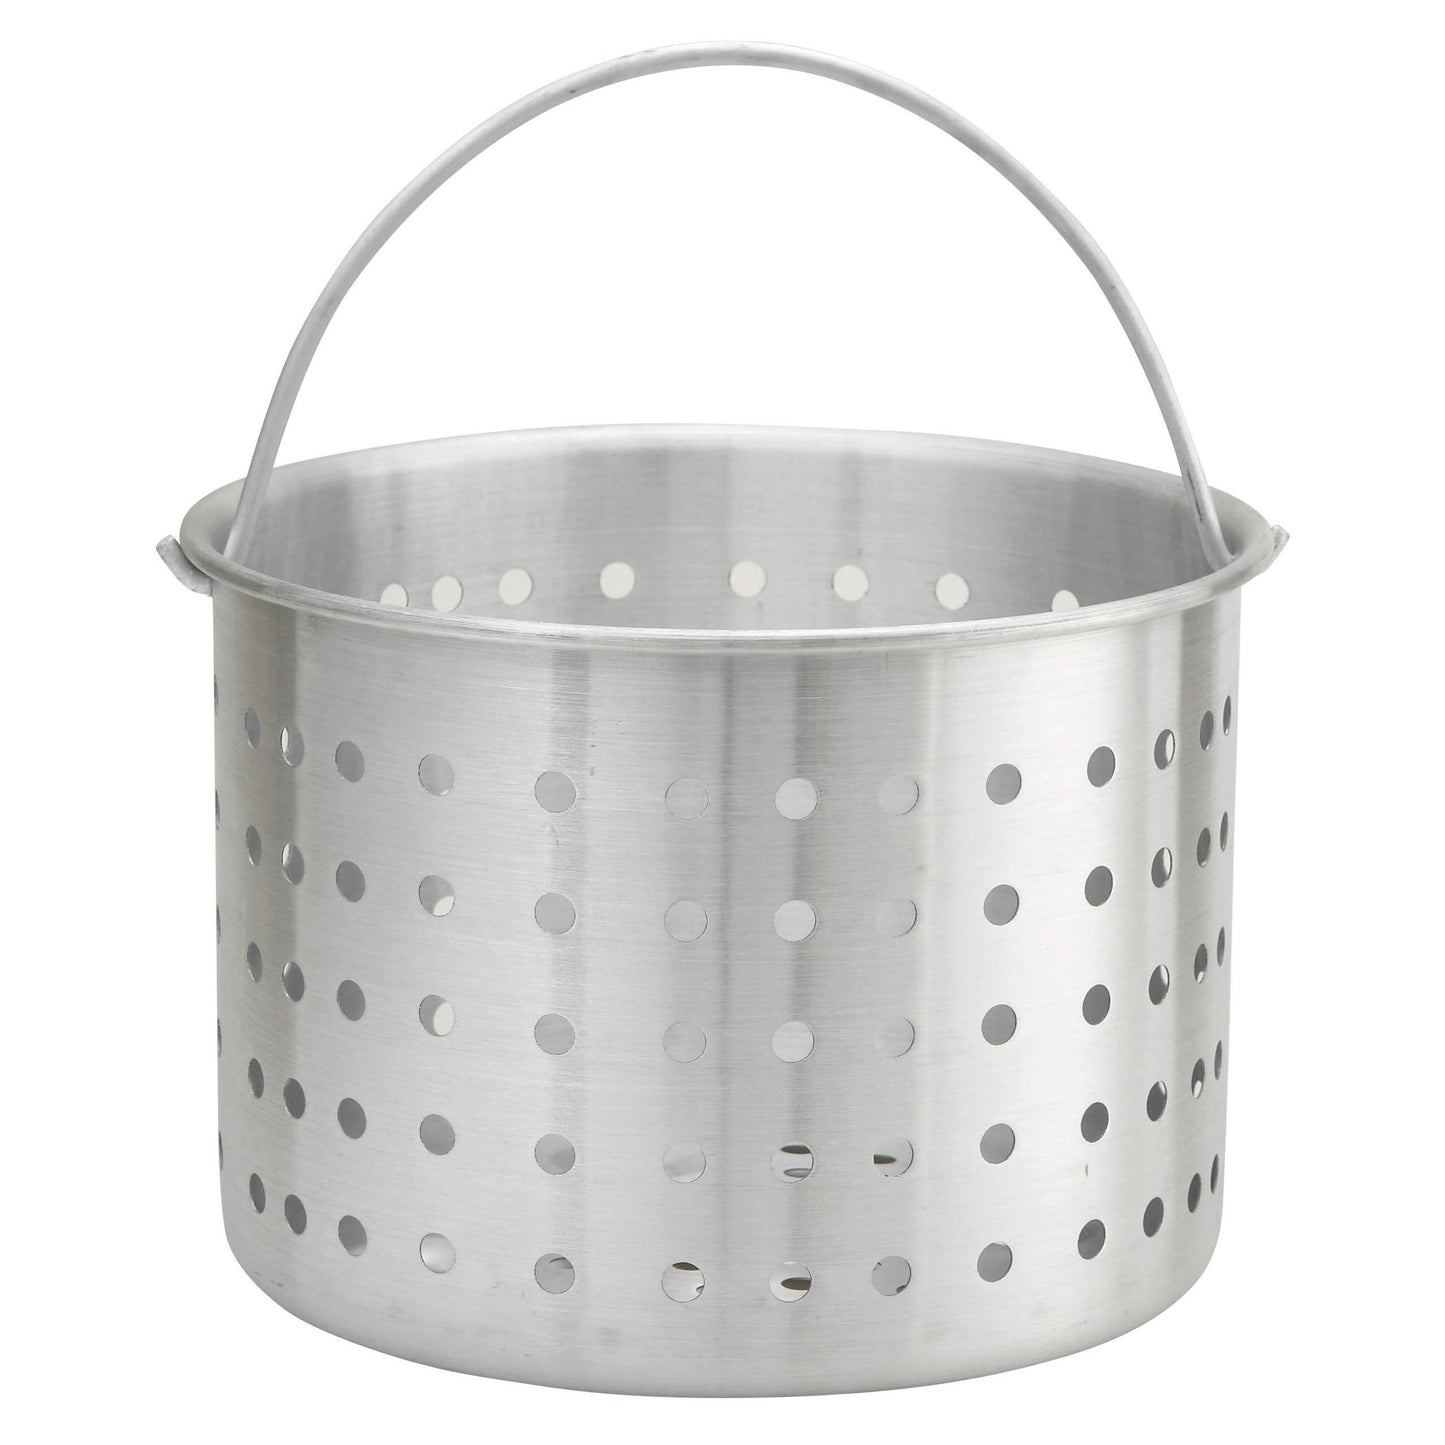 Winware Professional Aluminum Steamer Basket Fits 20-Quart Stock Pot, Silver - CookCave